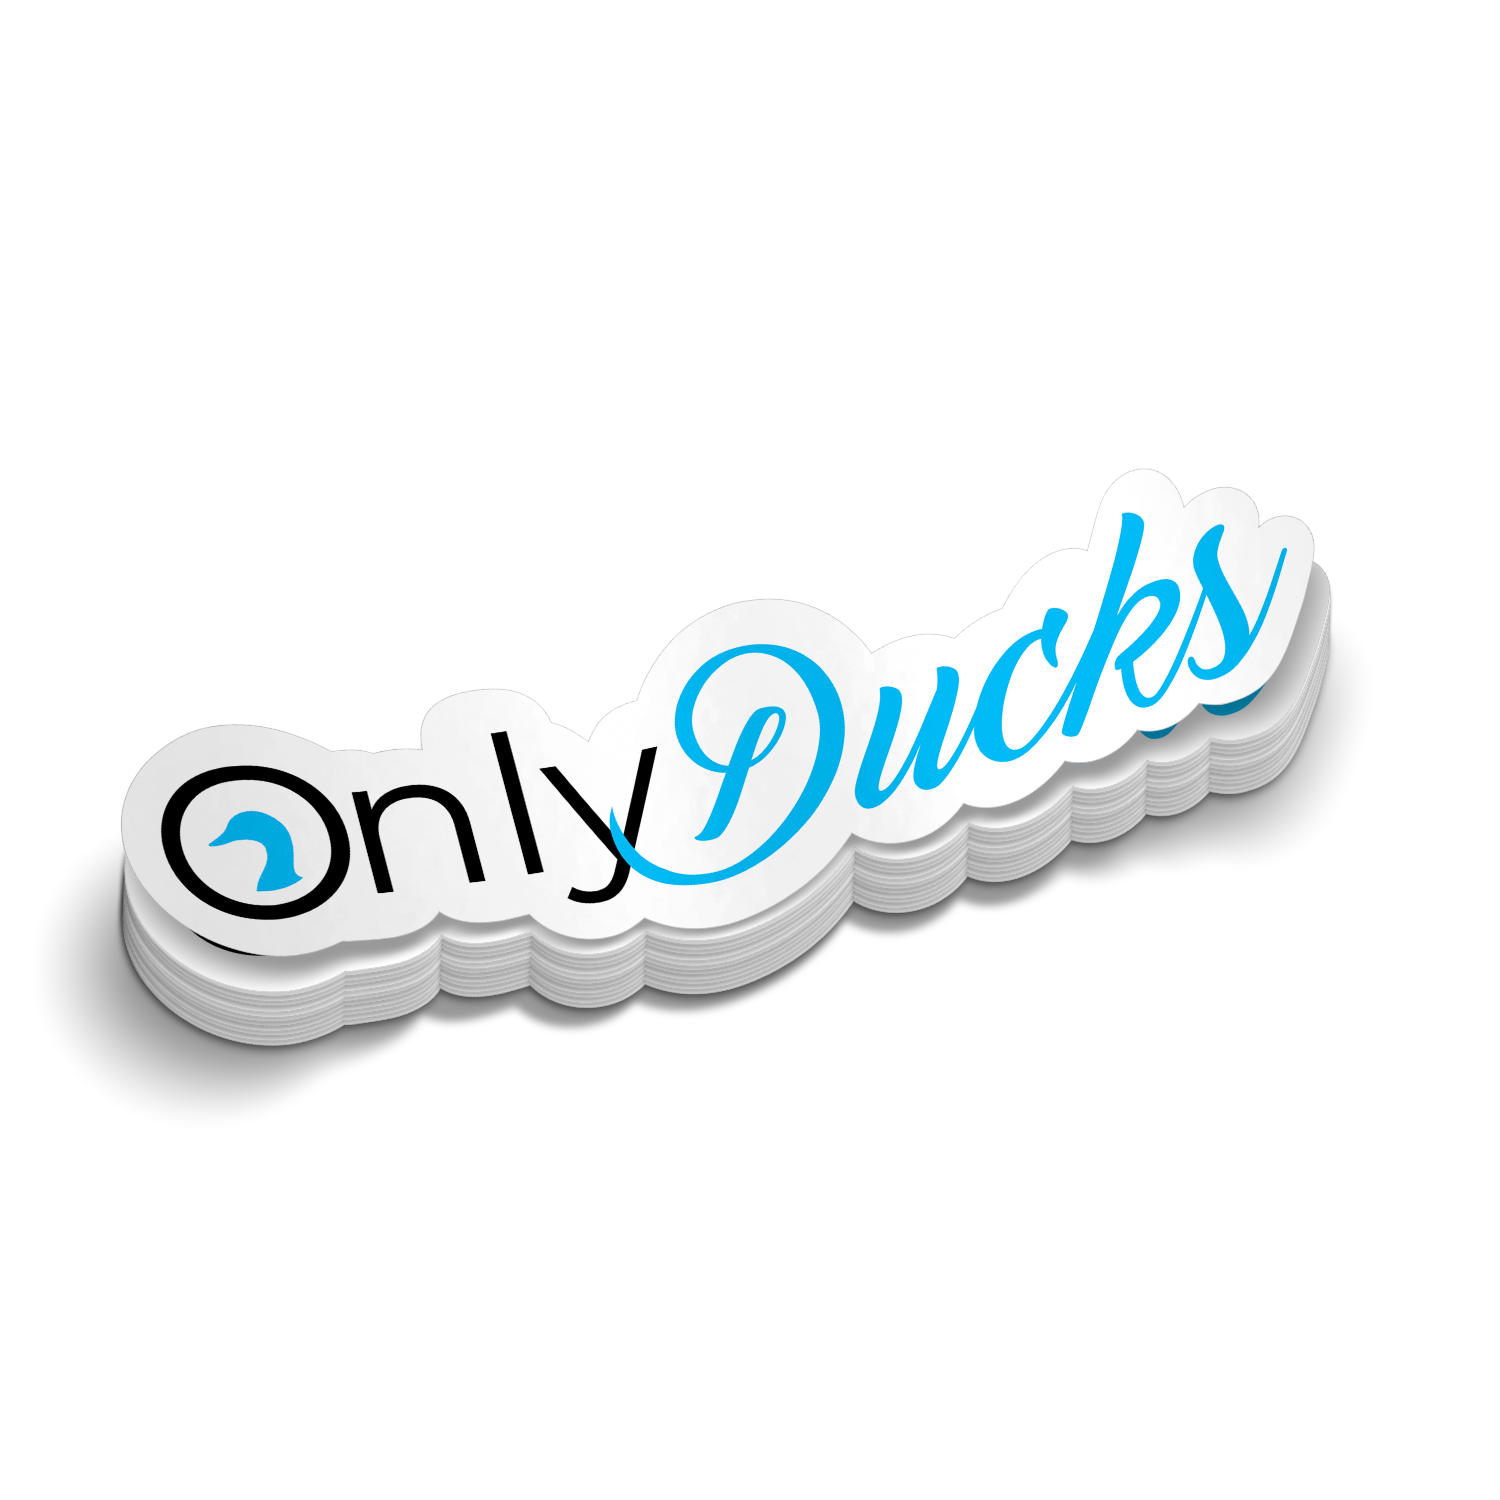 Only Ducks - Funny Duck Sticker